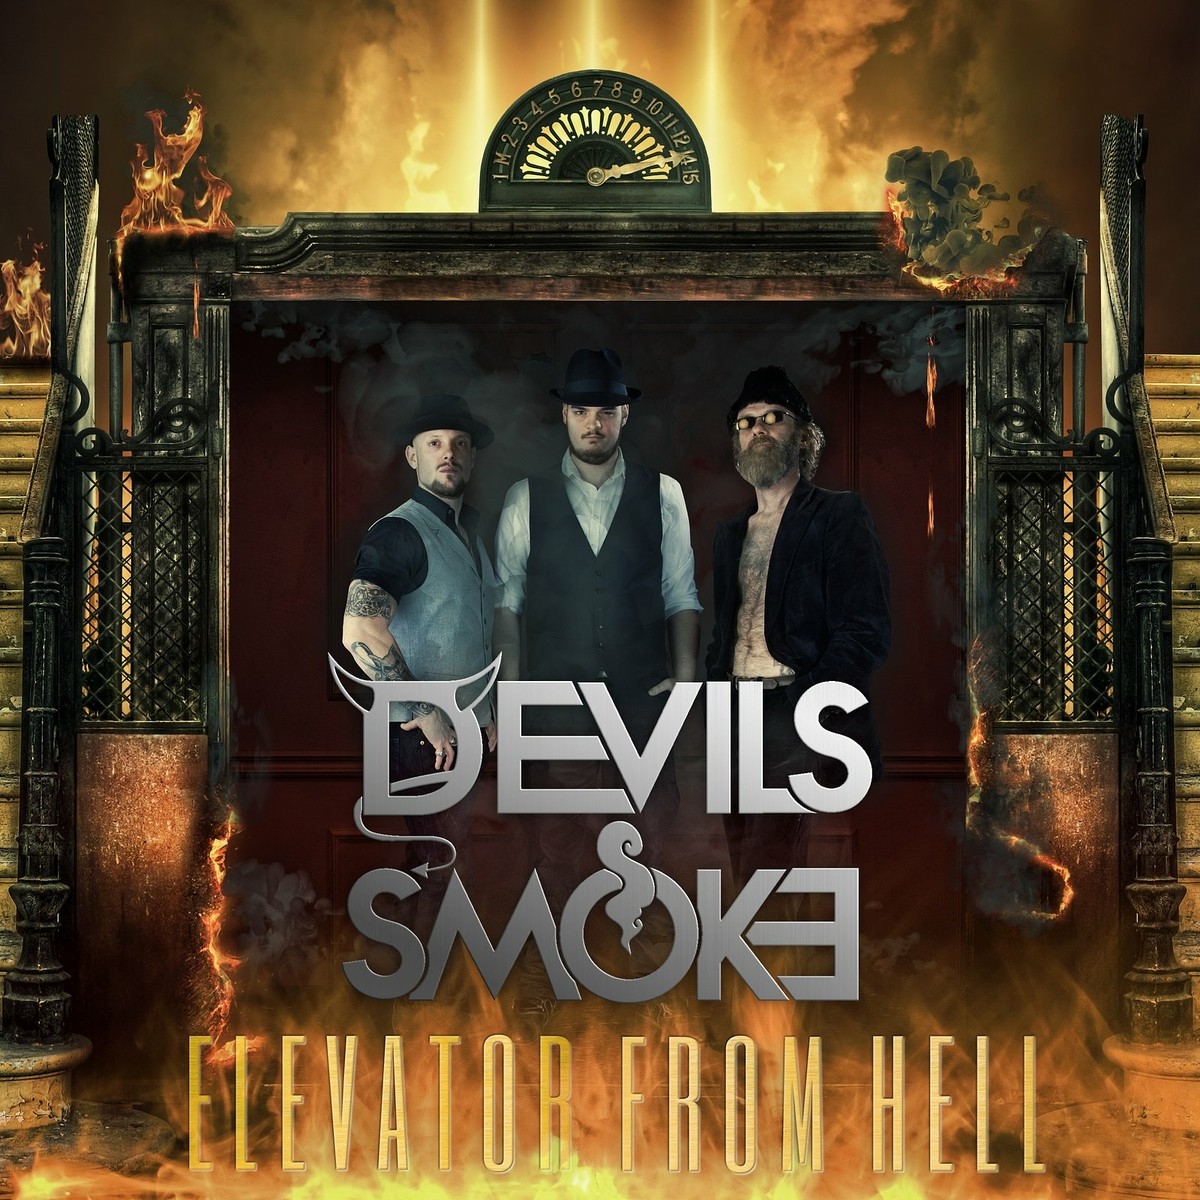 Devils Smoke - Elevator From Hell